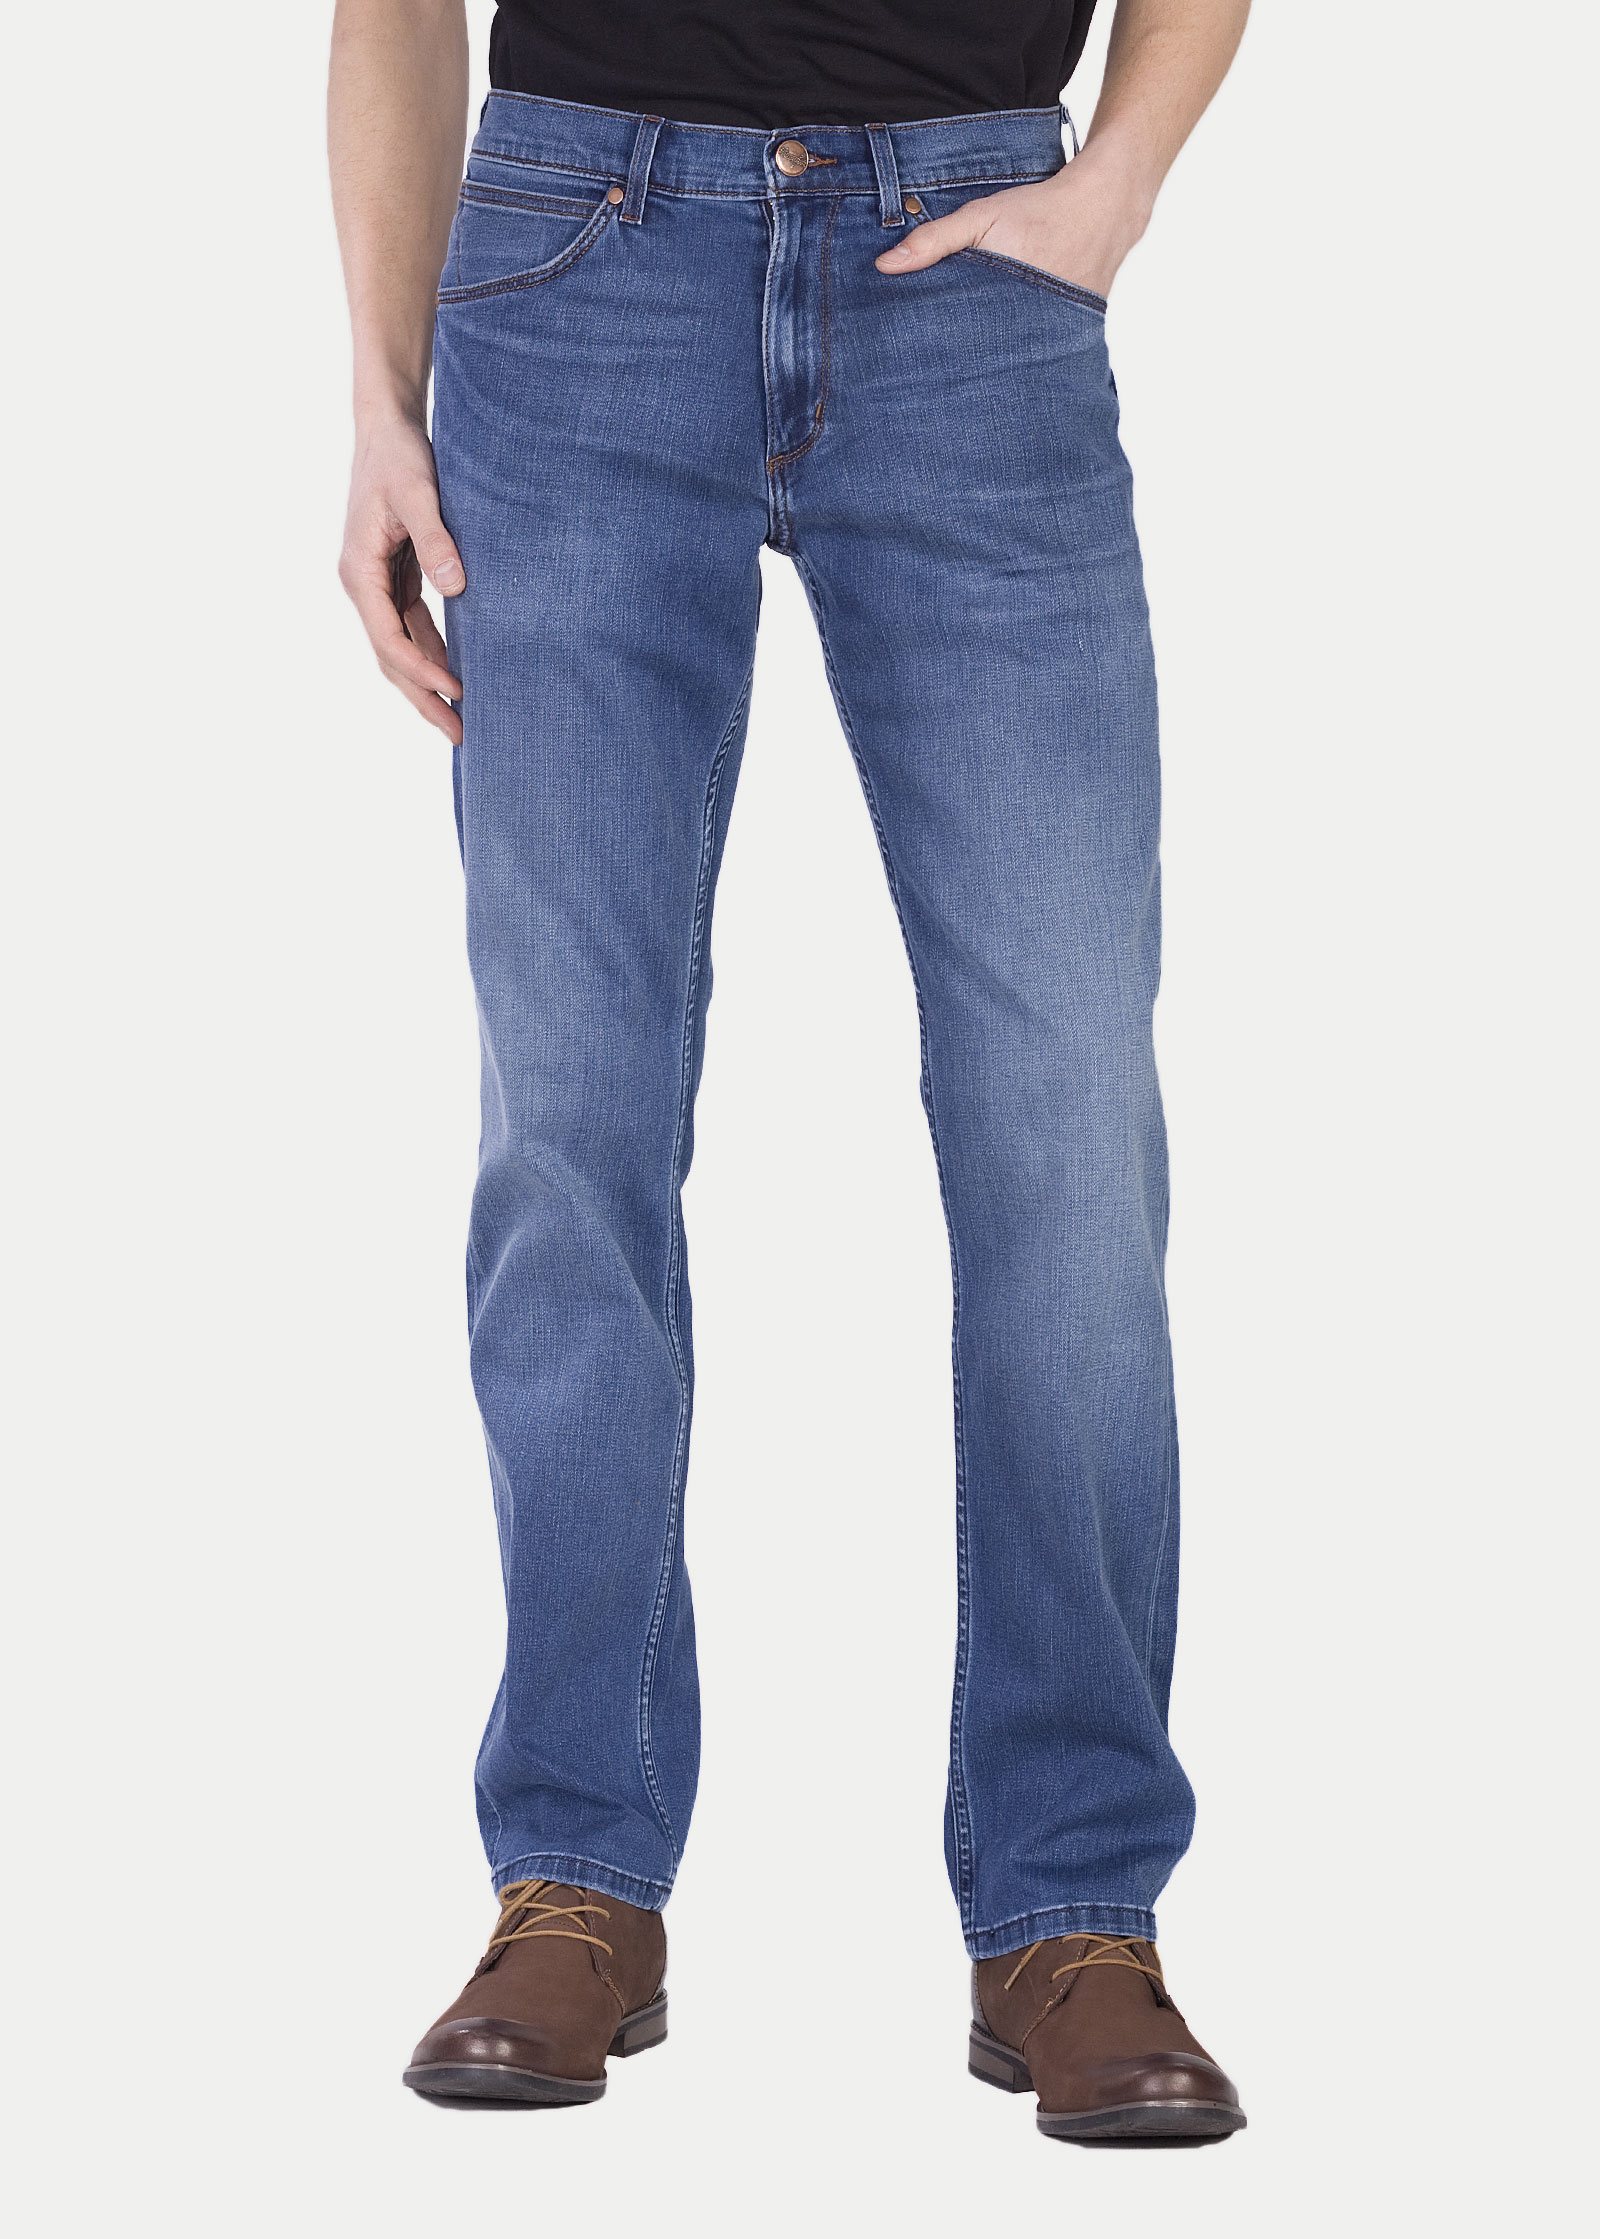 фото Джинсы мужские wrangler men greensboro jeans синие 40/30